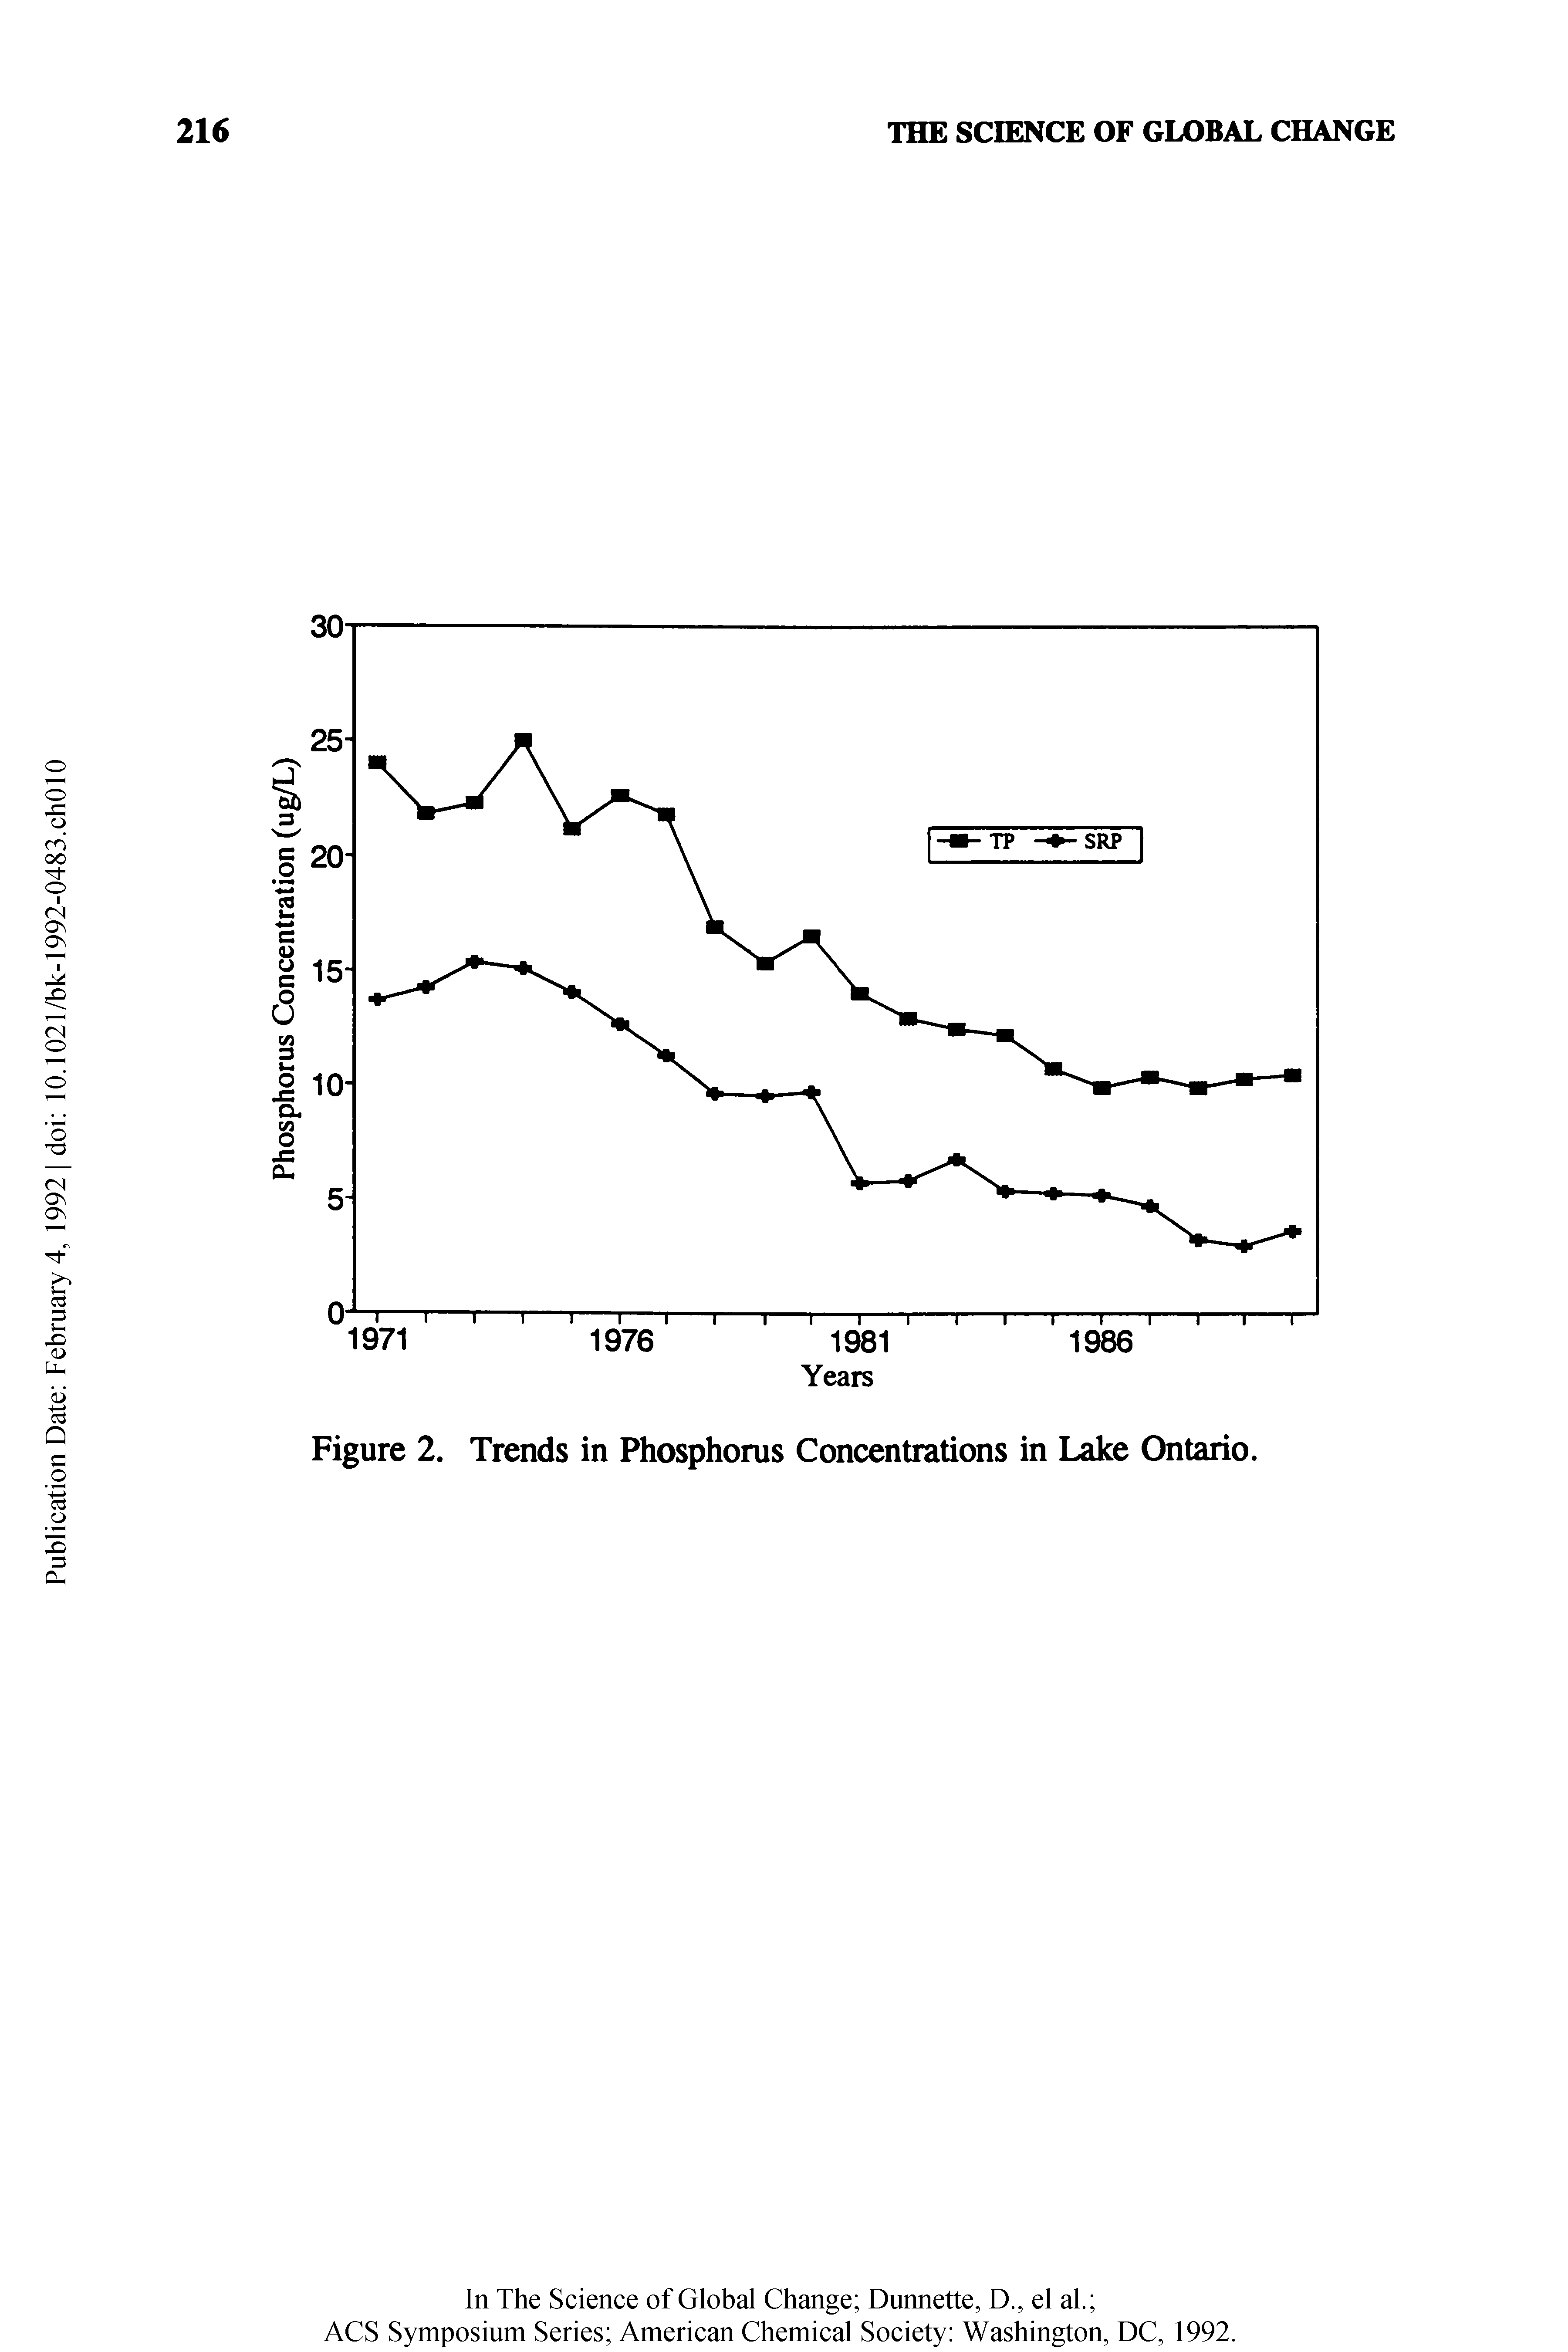 Figure 2. Trends in Phosphorus Concentrations in Lake Ontario.